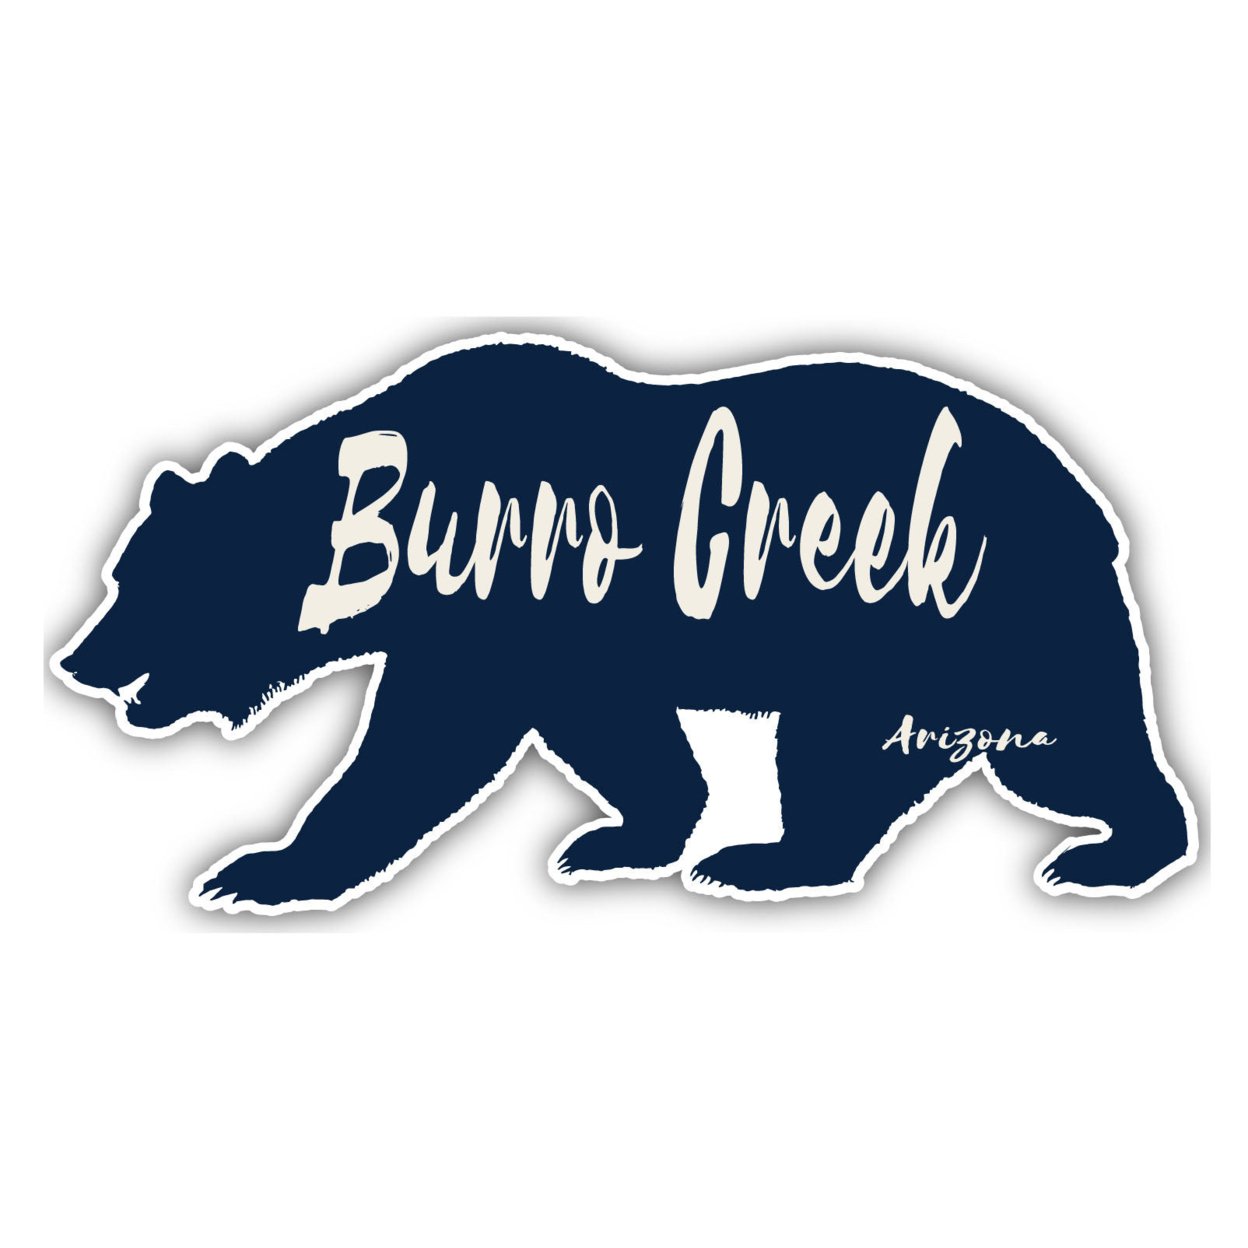 Burro Creek Arizona Souvenir Decorative Stickers (Choose Theme And Size) - Single Unit, 8-Inch, Bear